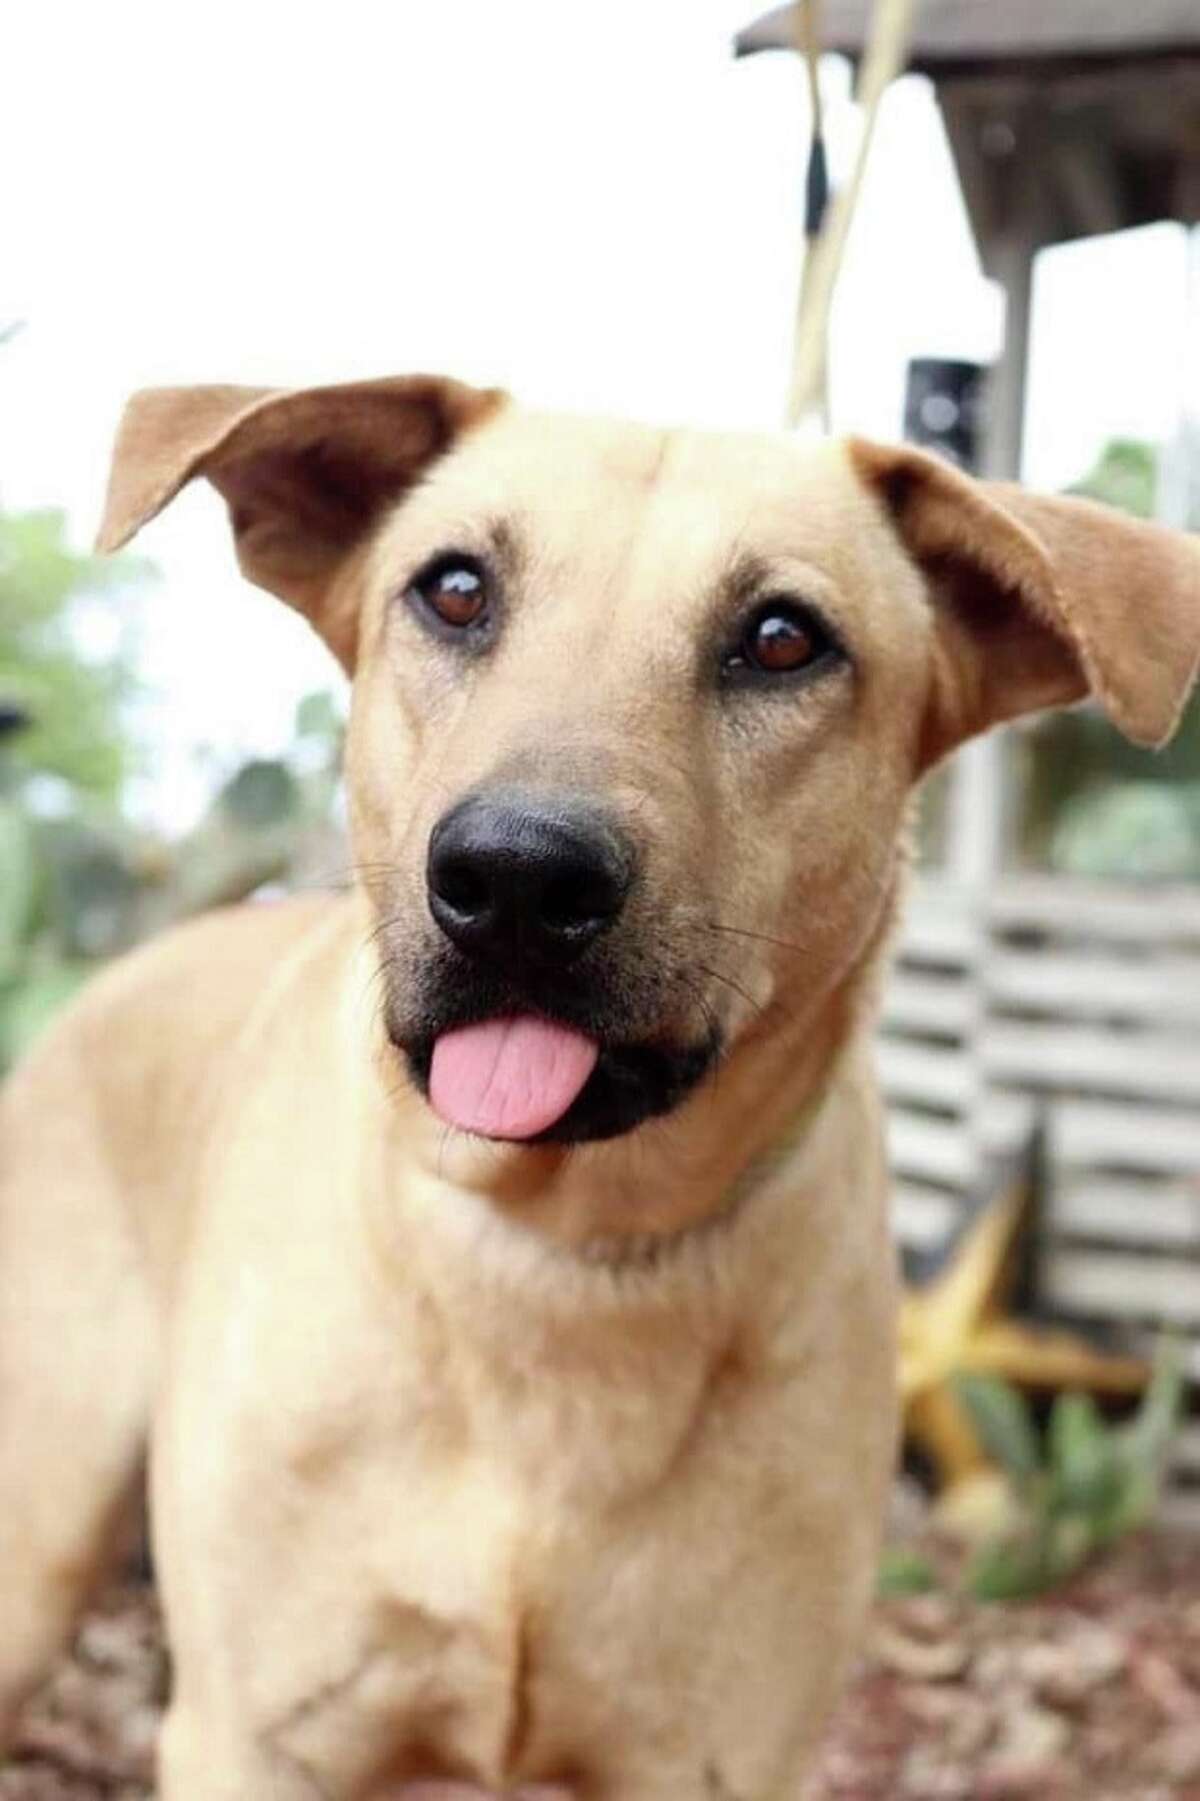 San Antonio animal rescue groups to hold ‘mega adoption’ event this weekend